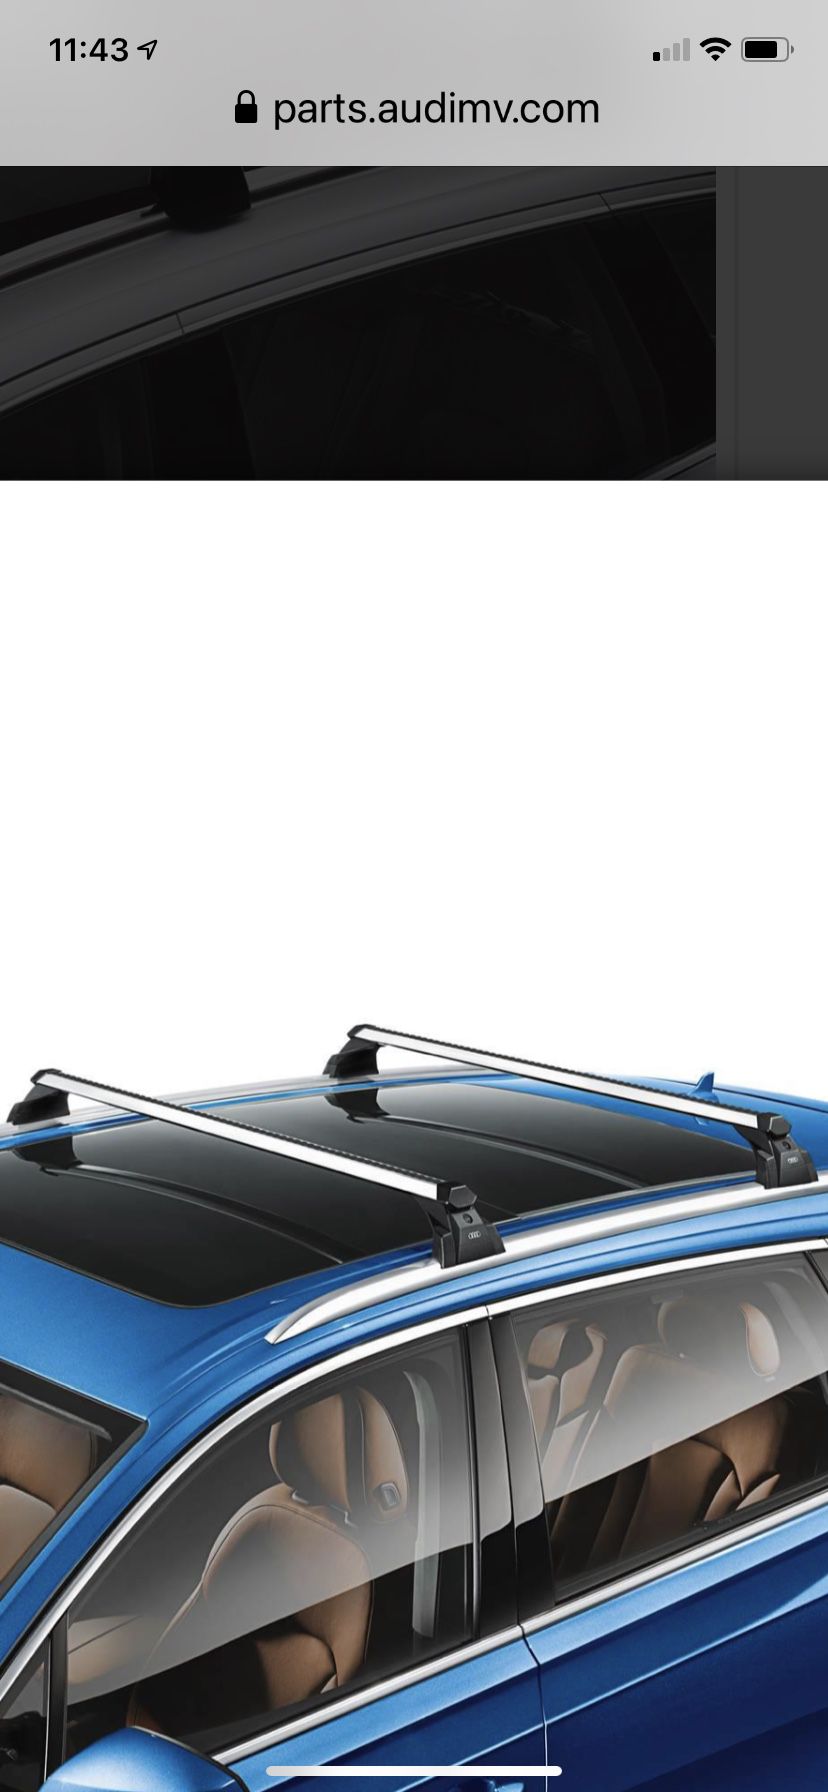 Audi- OEM Q7  Accessories -Roof Racks, All Weather Floor Mats)